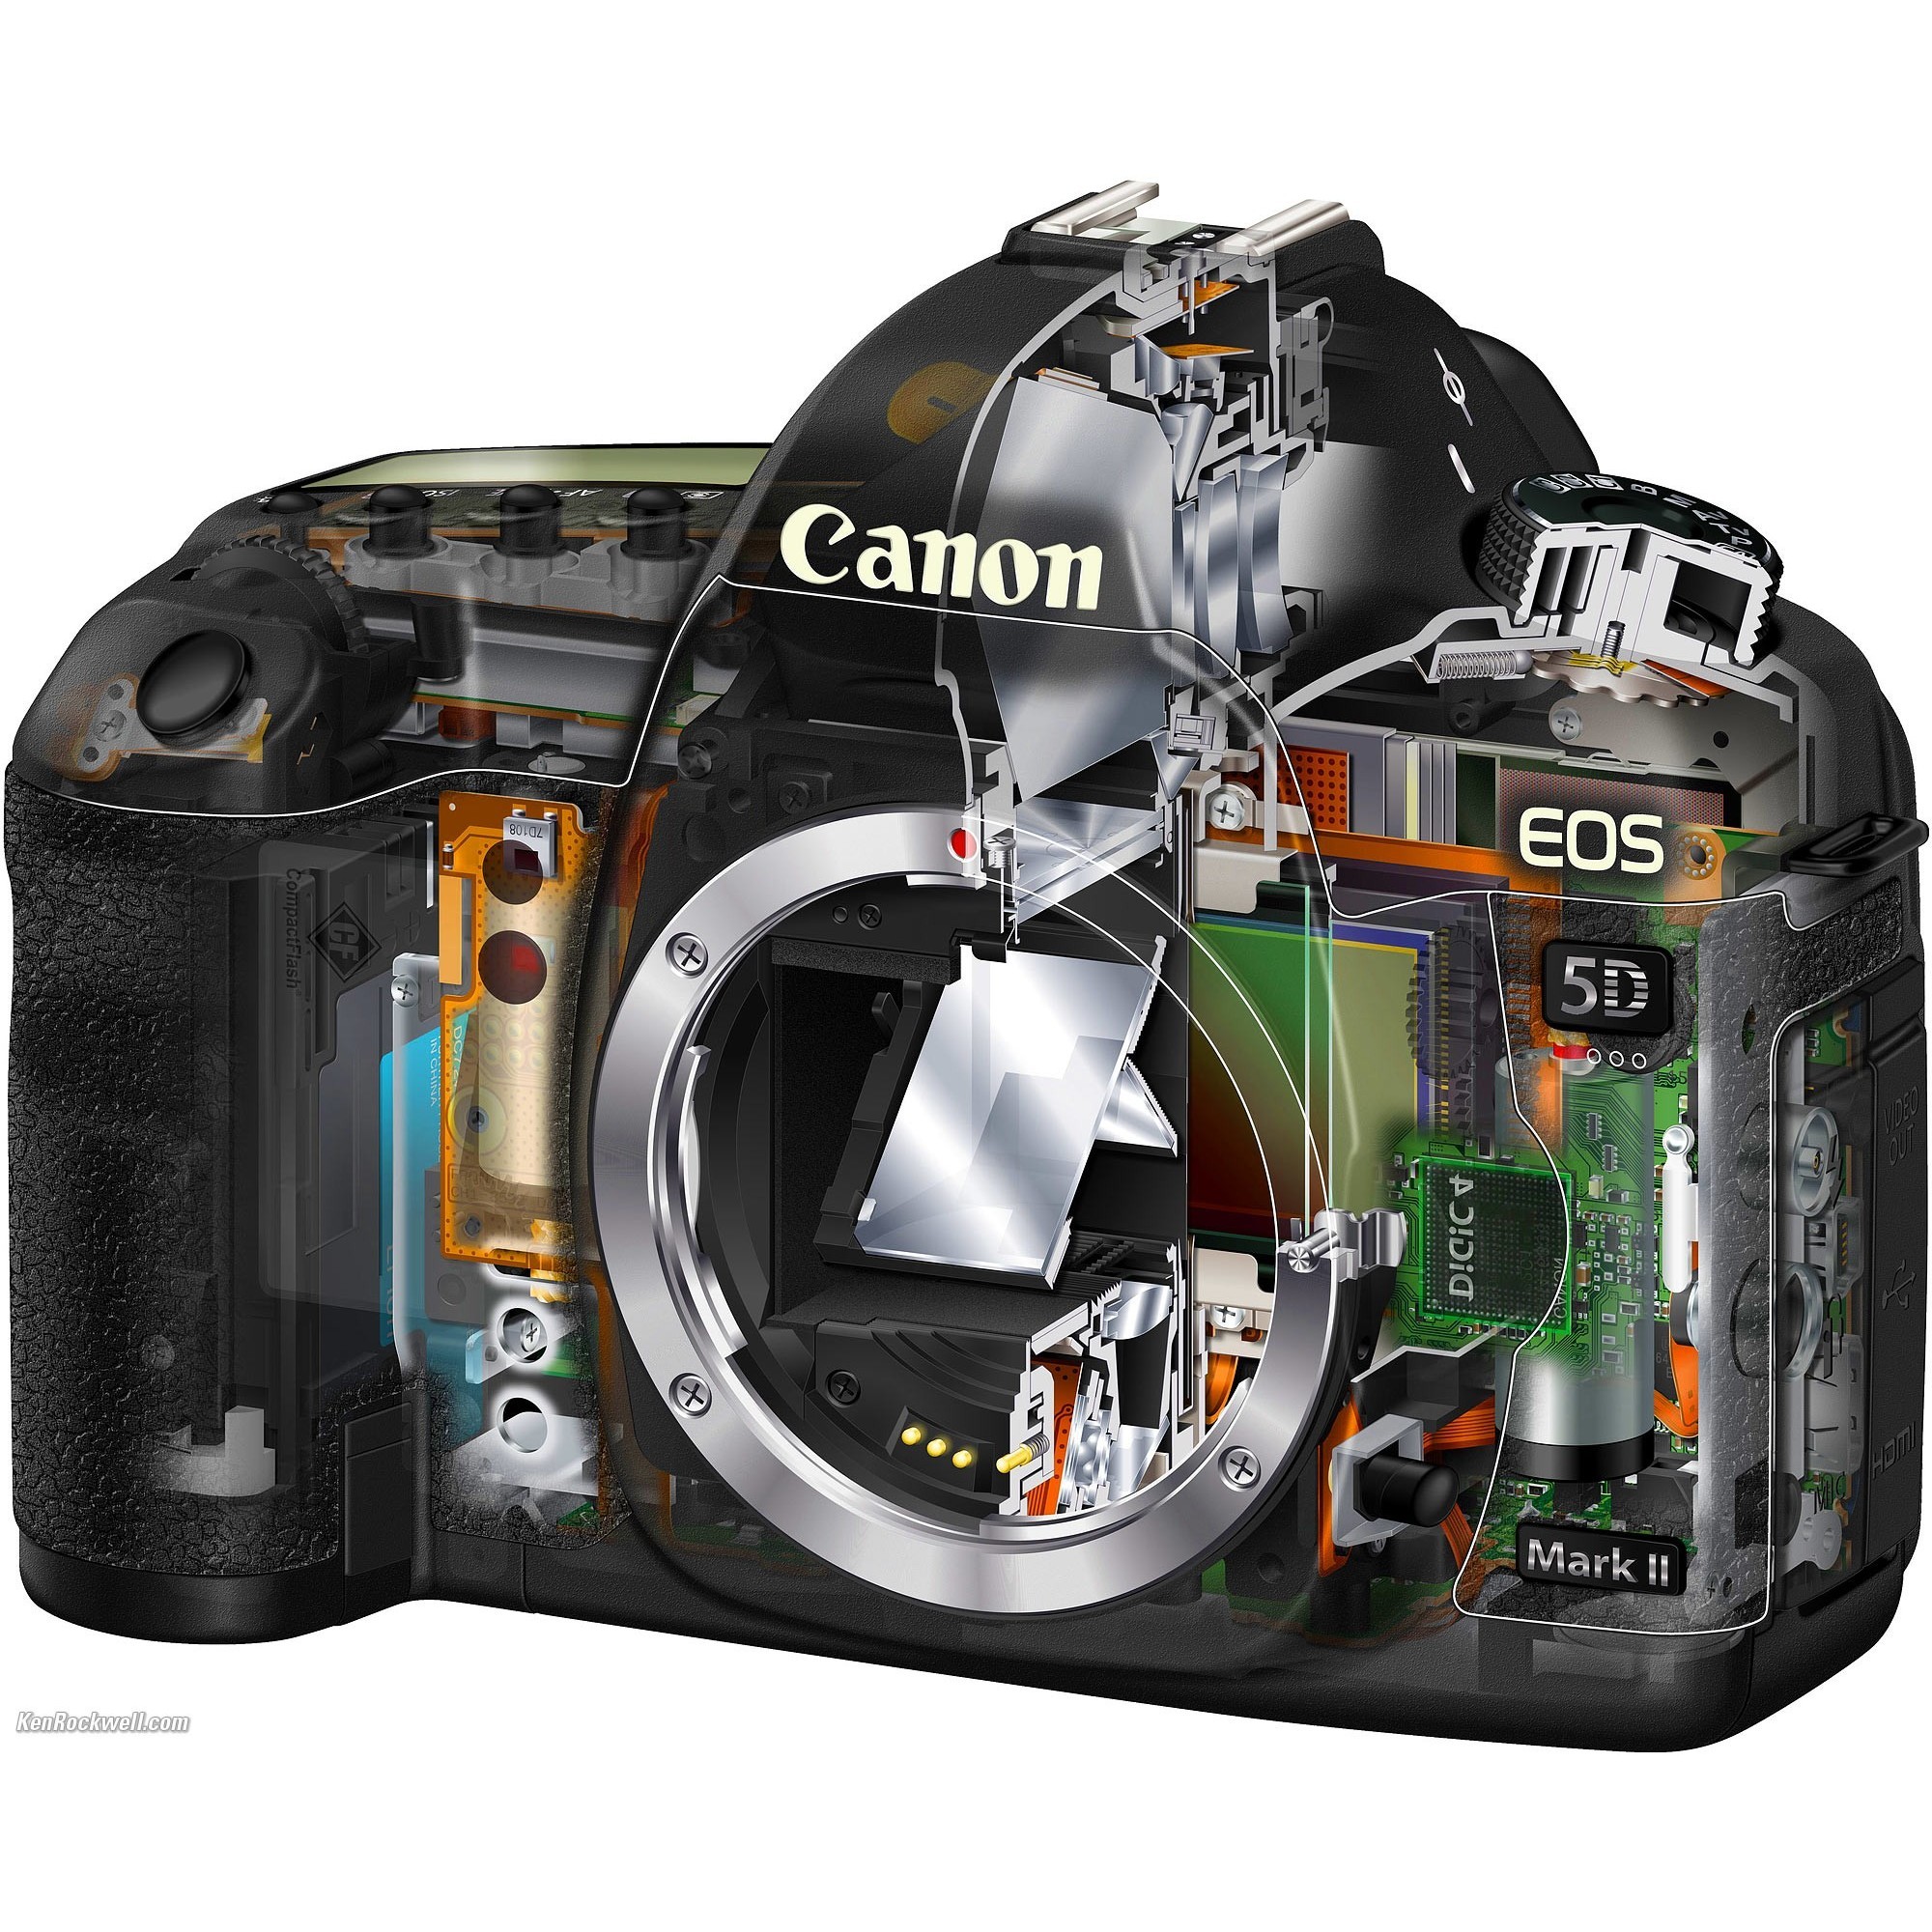 Ремонт фотокамер canon. Canon 5d Mark II. Фотоаппарат 5d Mark 2. Зеркальный фотоаппарат Canon 5d. Зеркало для Canon 5d.